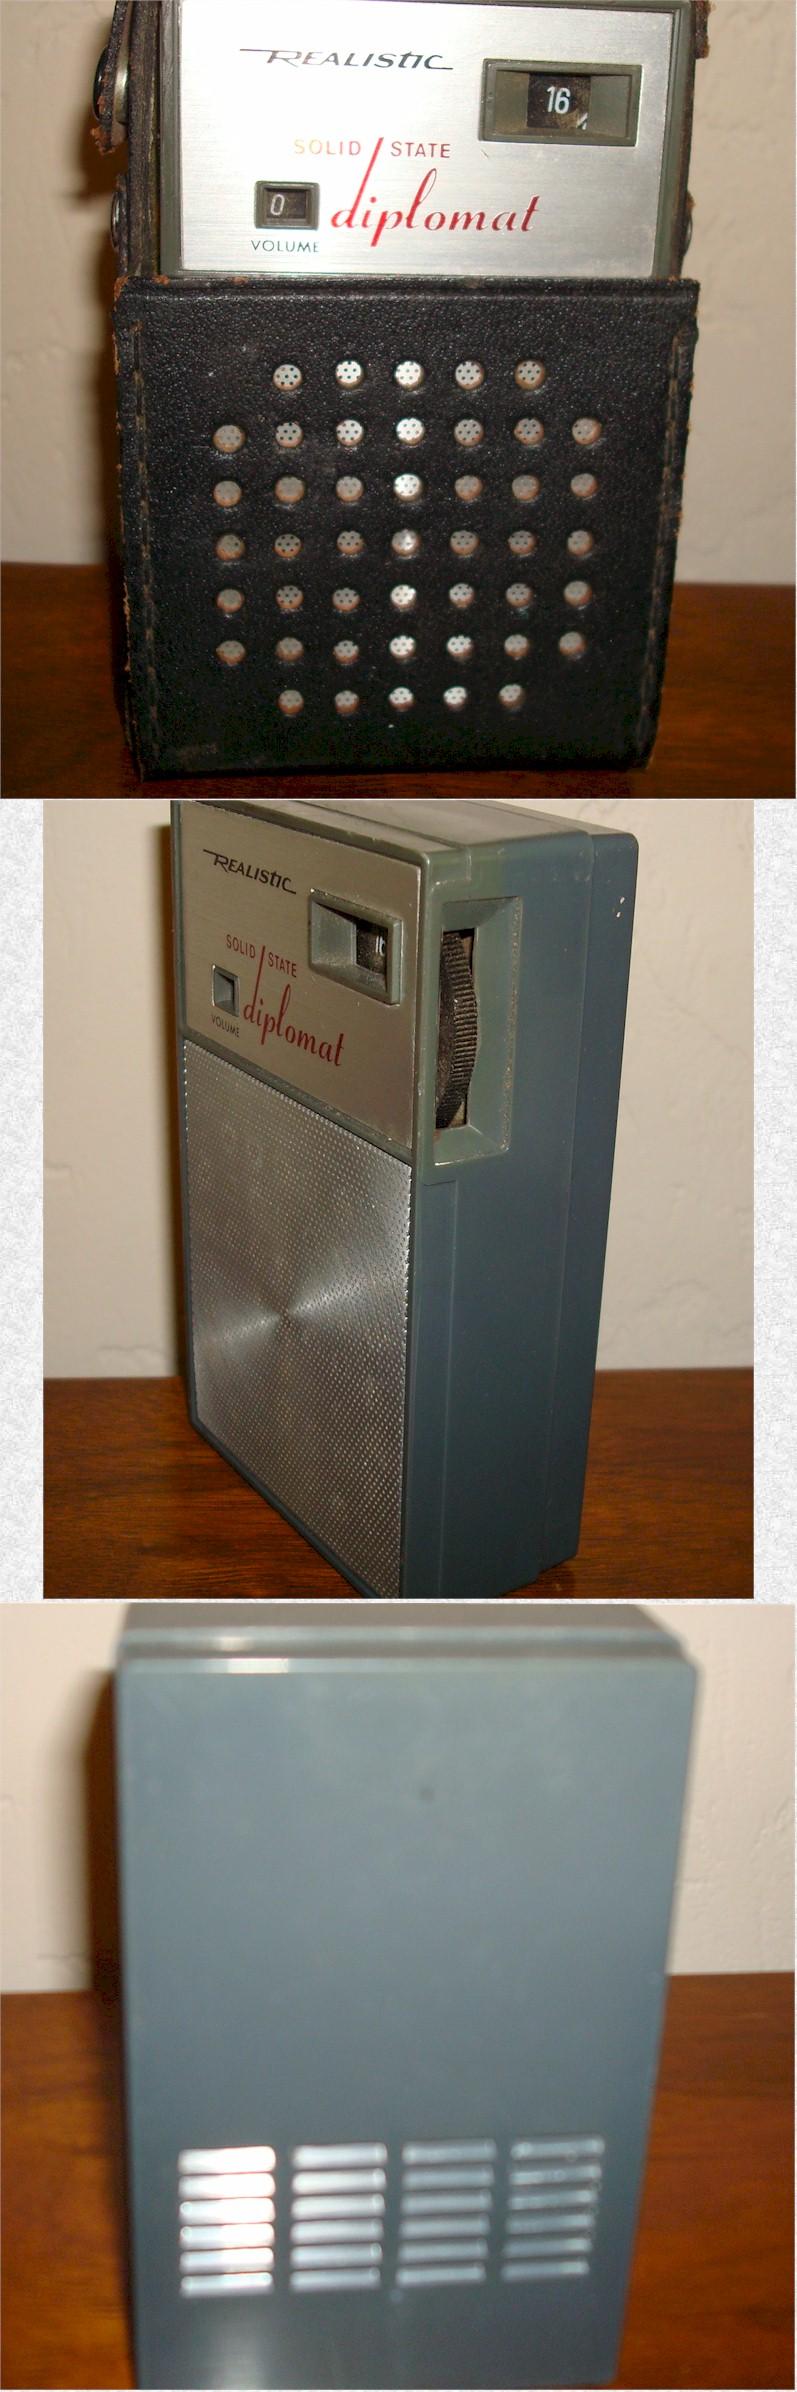 Realistic 12-649 "Diplomat" Pocket Transistor